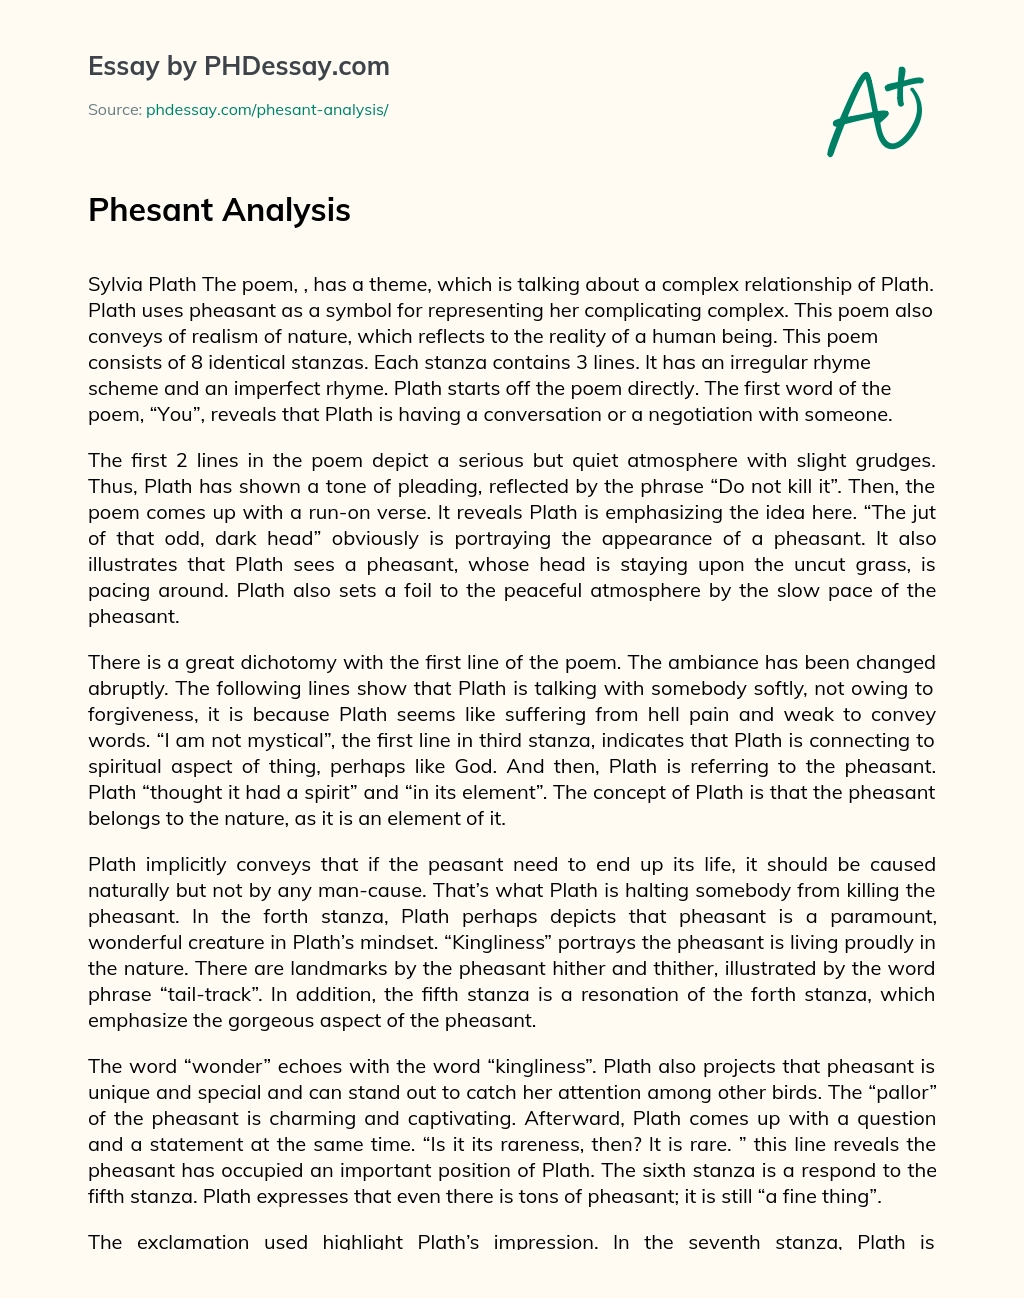 Phesant Analysis essay